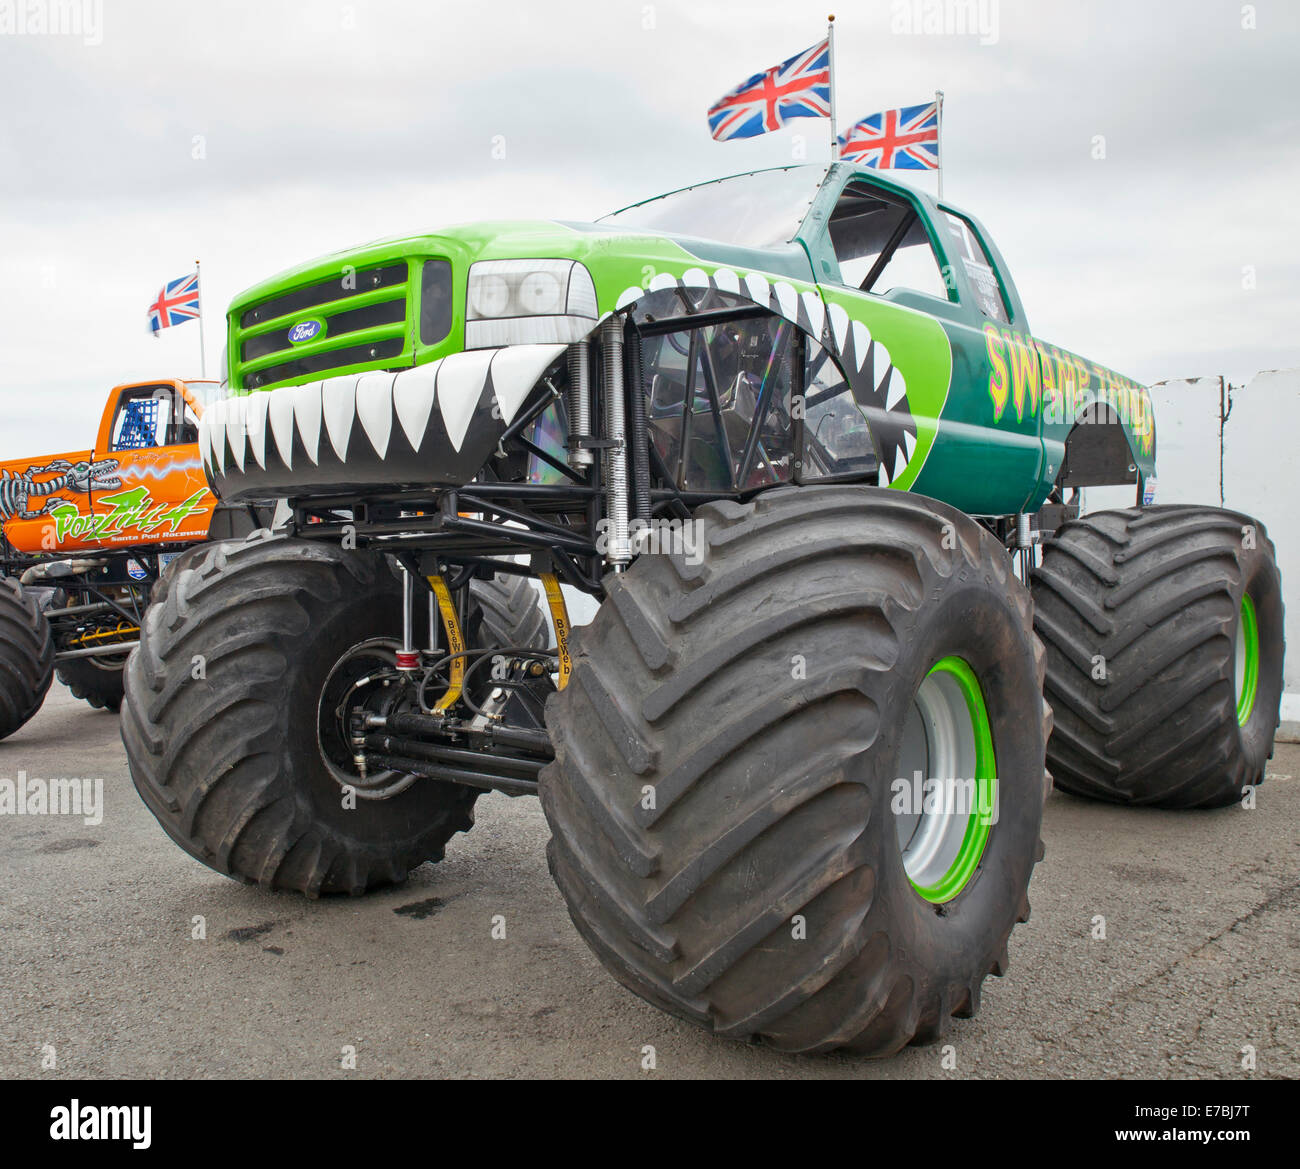 Monster-Truck genannt Swamp Thing. Stockfoto